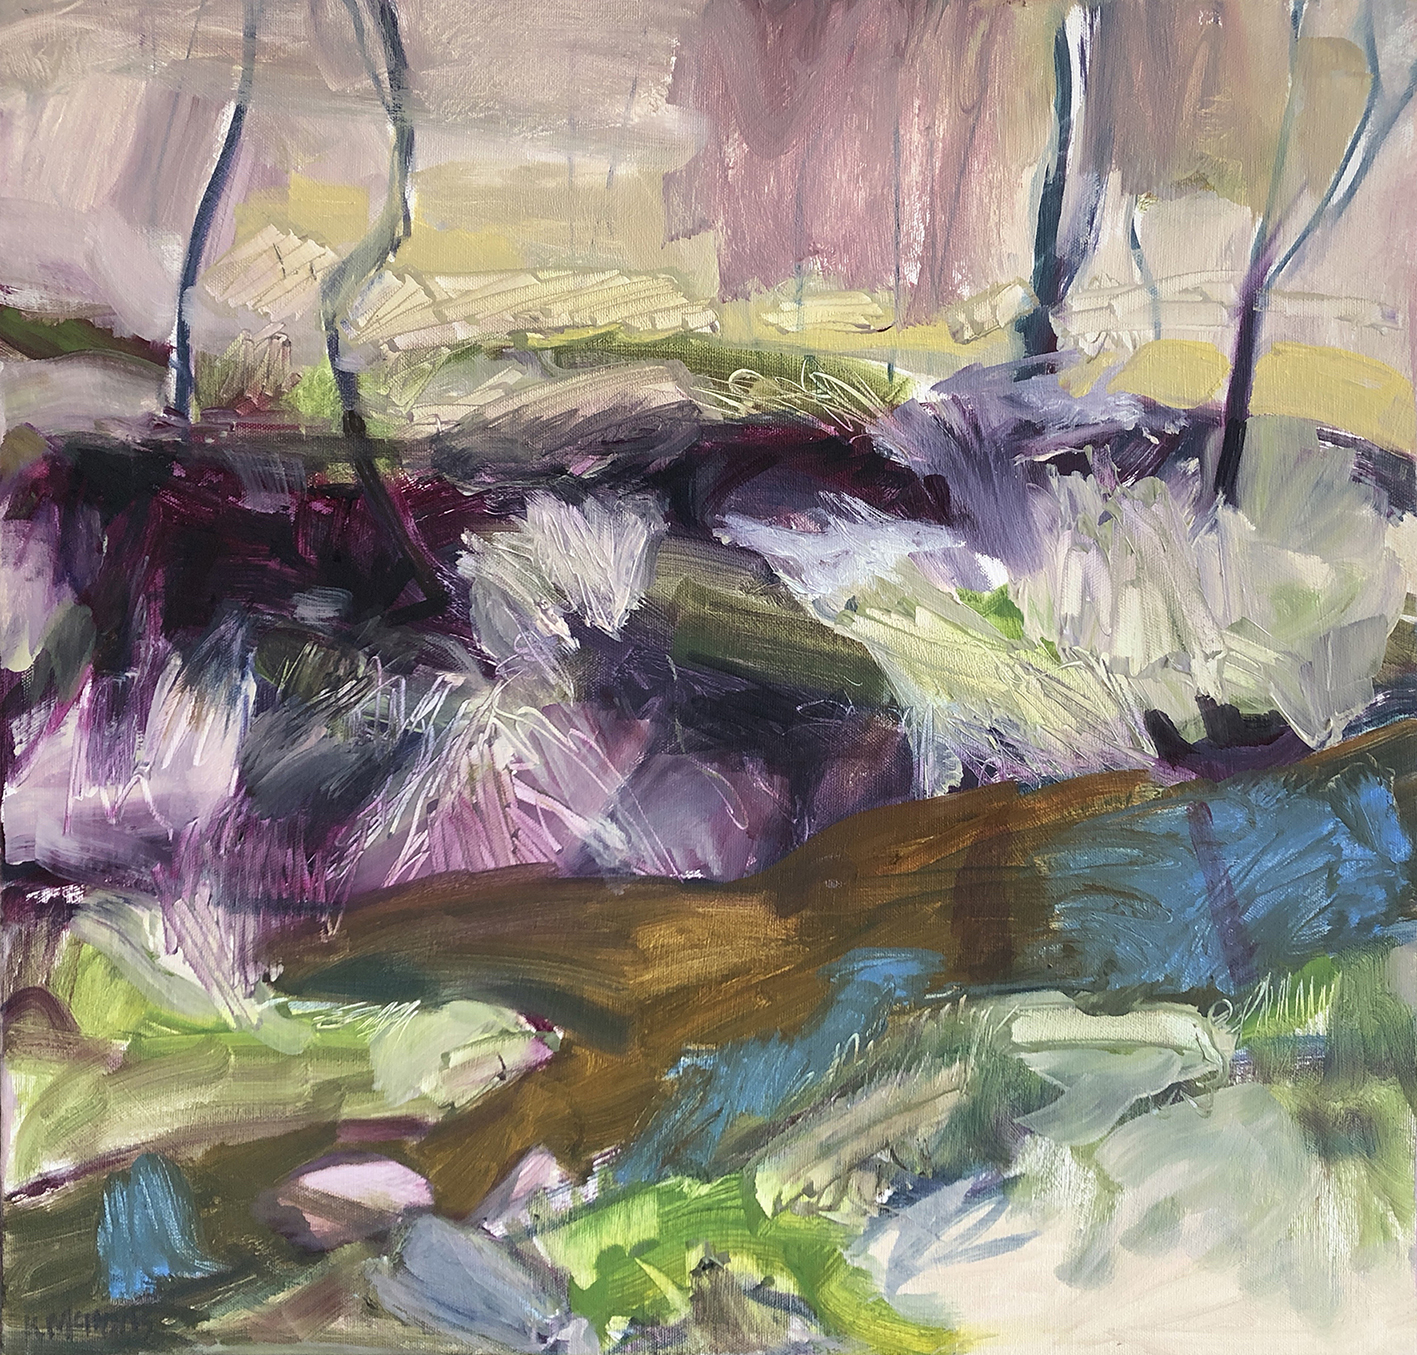 Kerry McInnis 'Poa grass Bank' Oil on Canvas 50x50cm $3,600